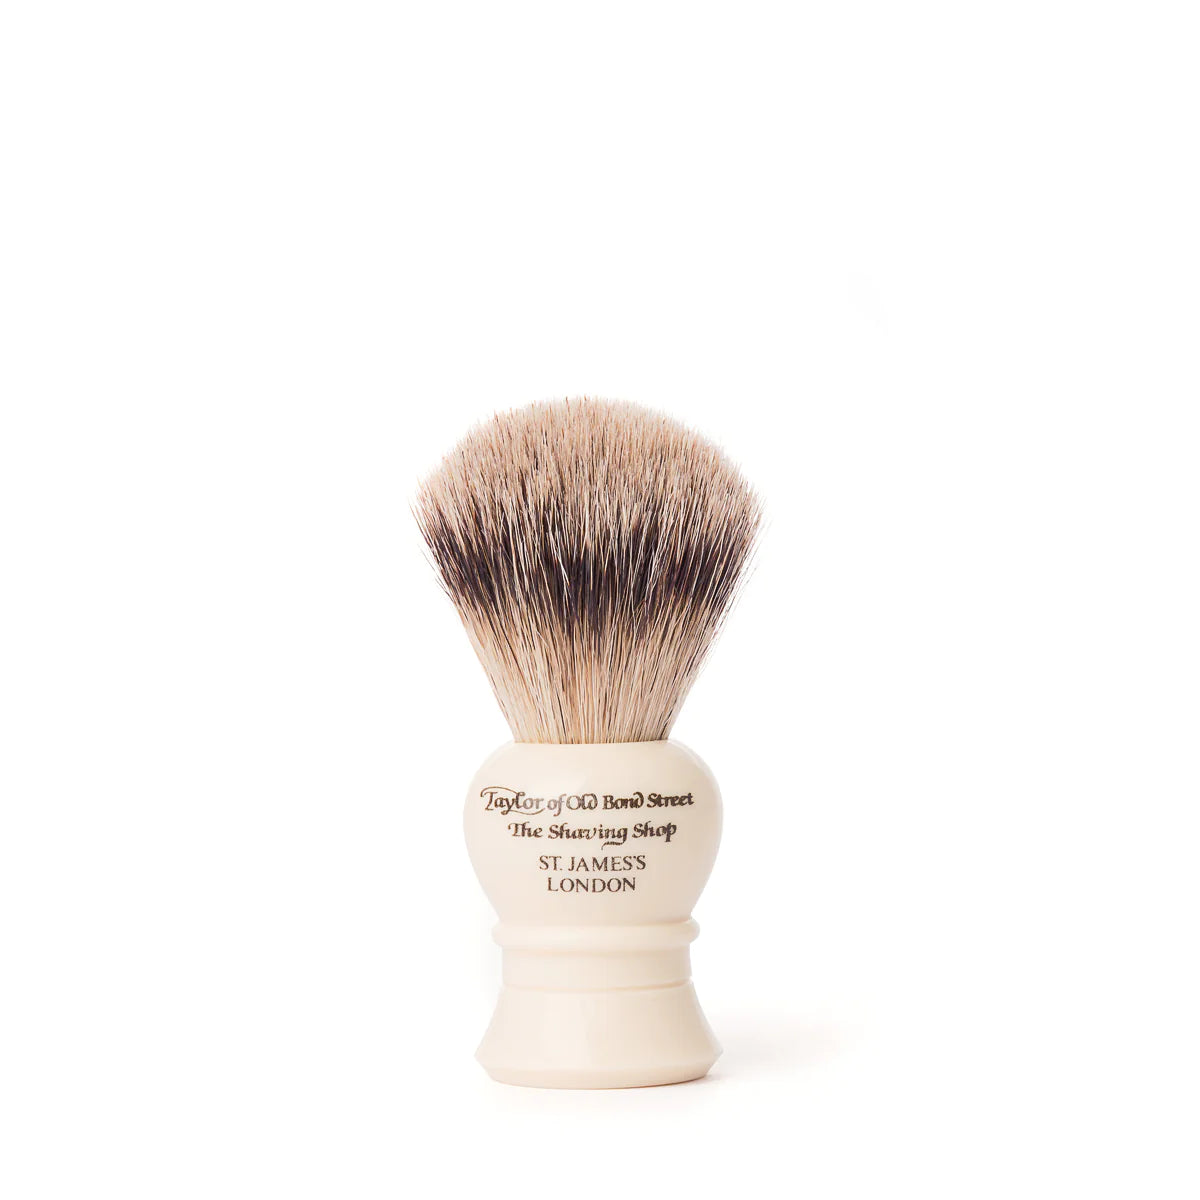 Taylor of Old Bond Street Traditional Super Badger Shaving Brush - medium, immitation ivory